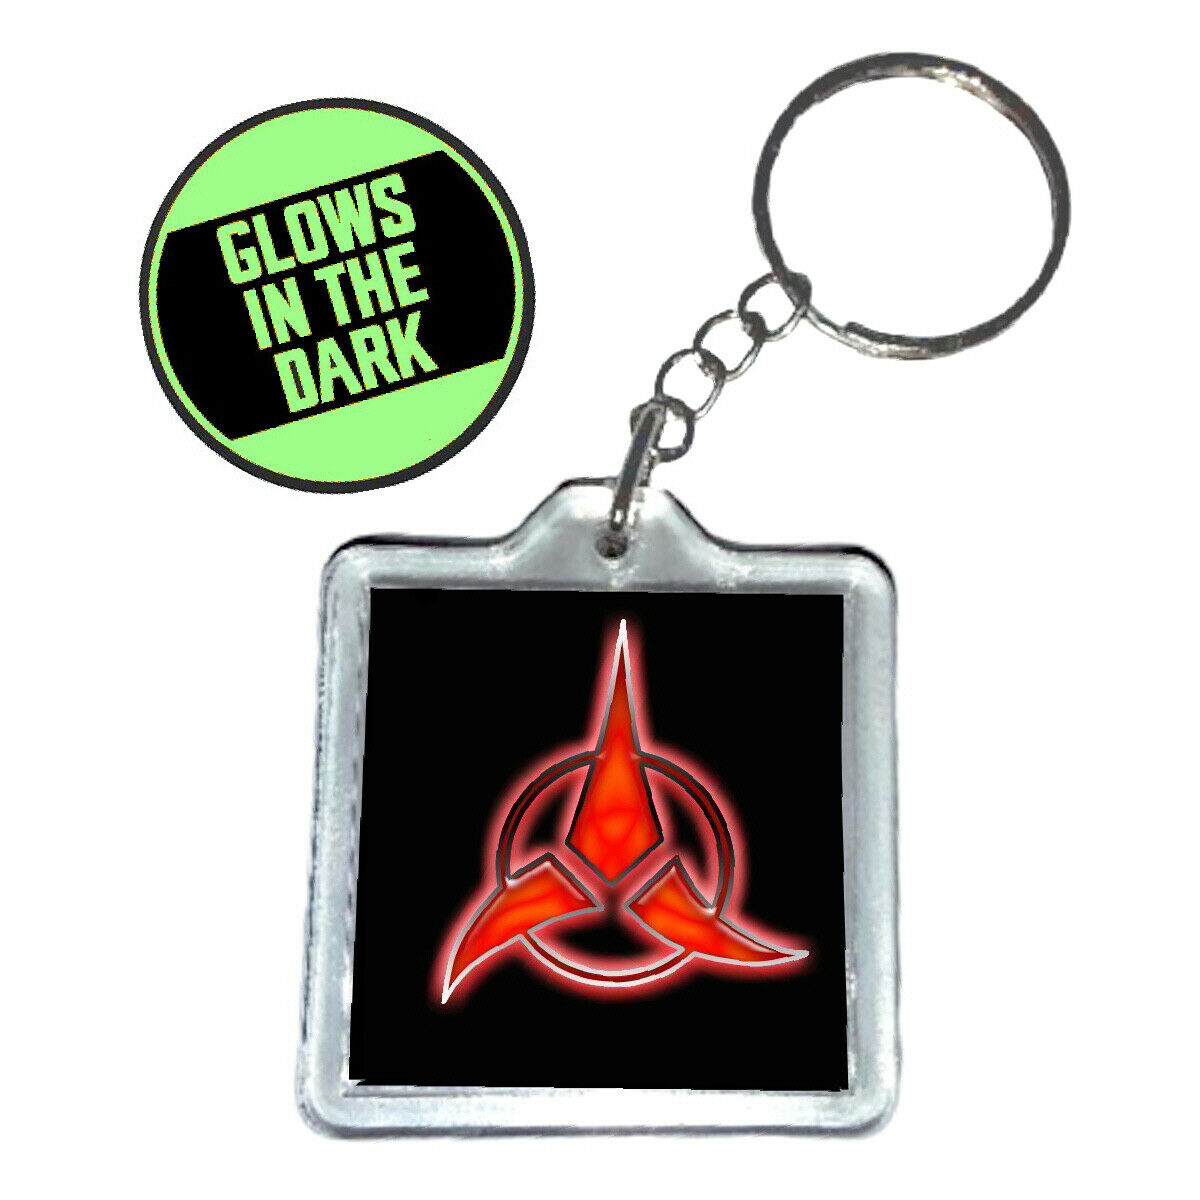 Klingon Emblem Star Trek Glow in the dark Key chain keyring